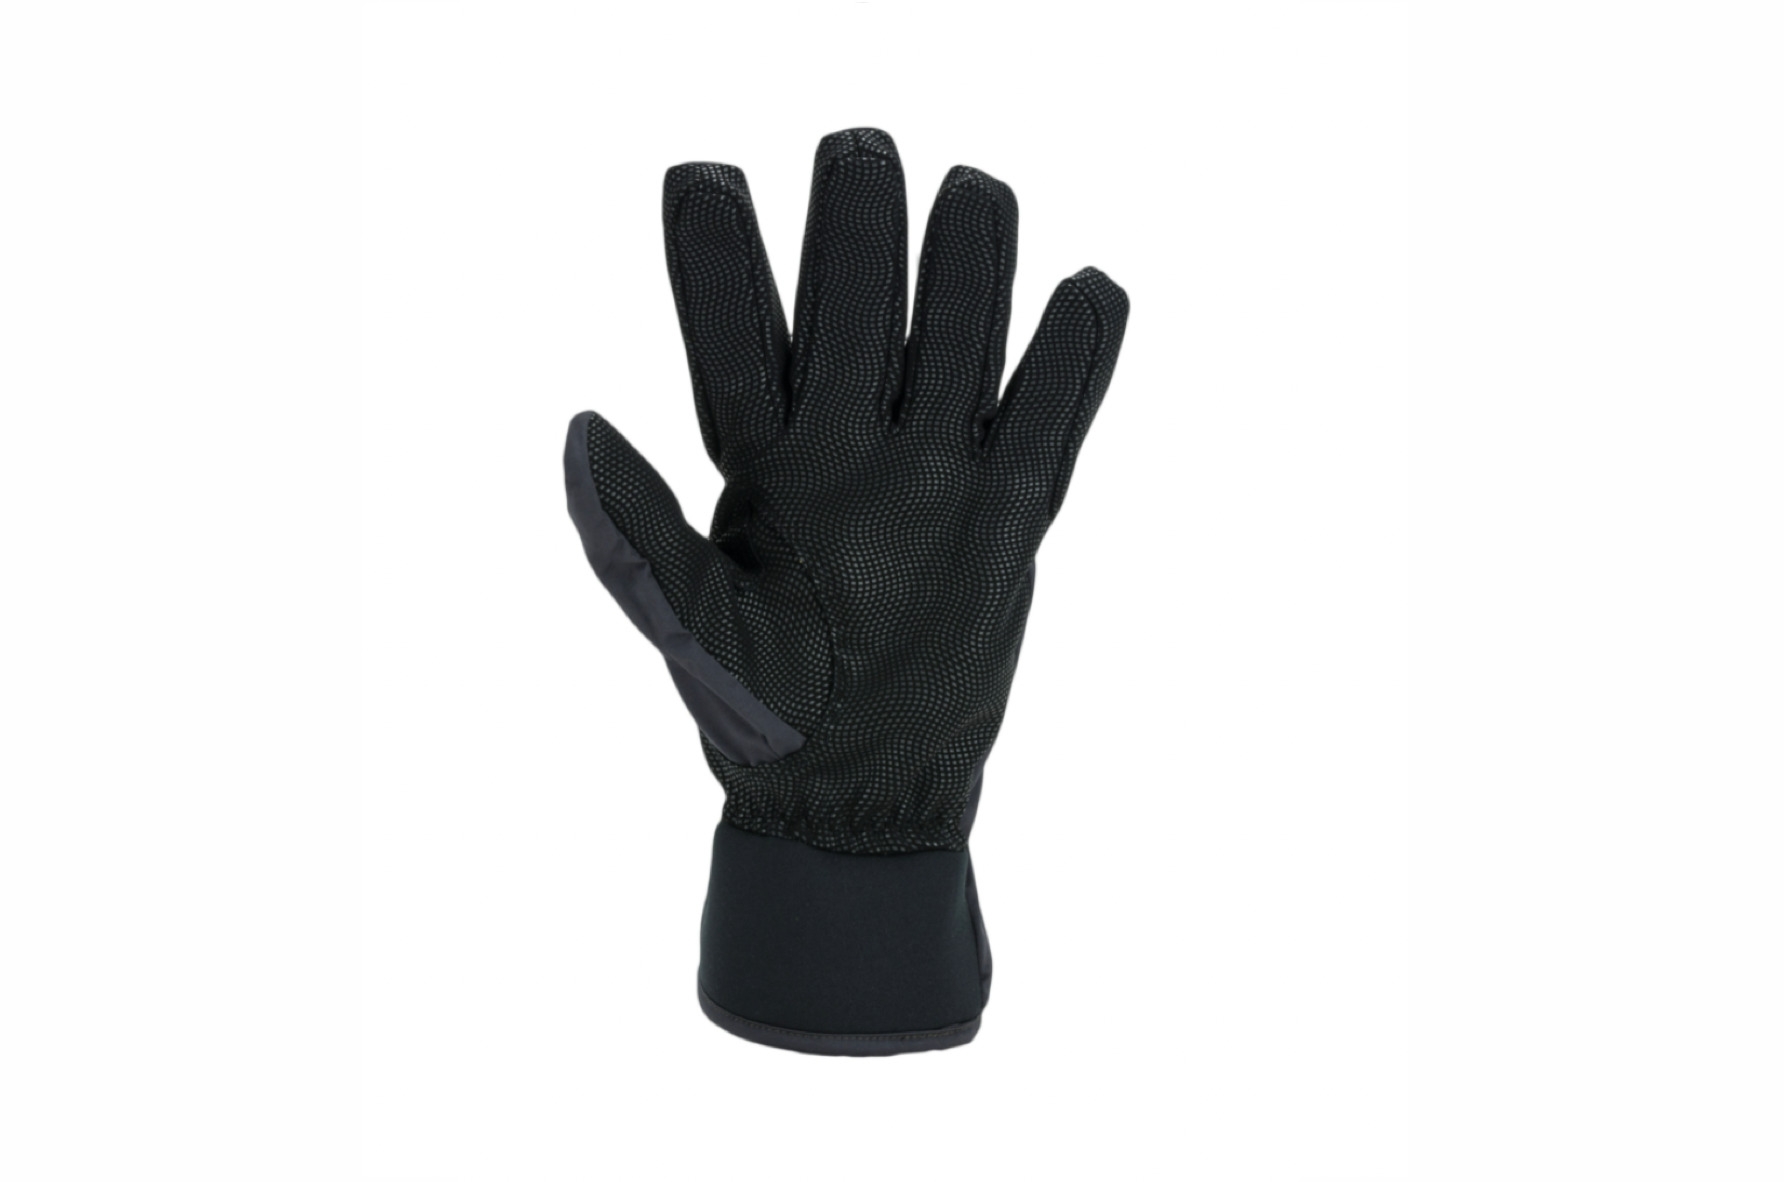 Sealskinz Women’s Waterproof All-Weather Lightweight Glove